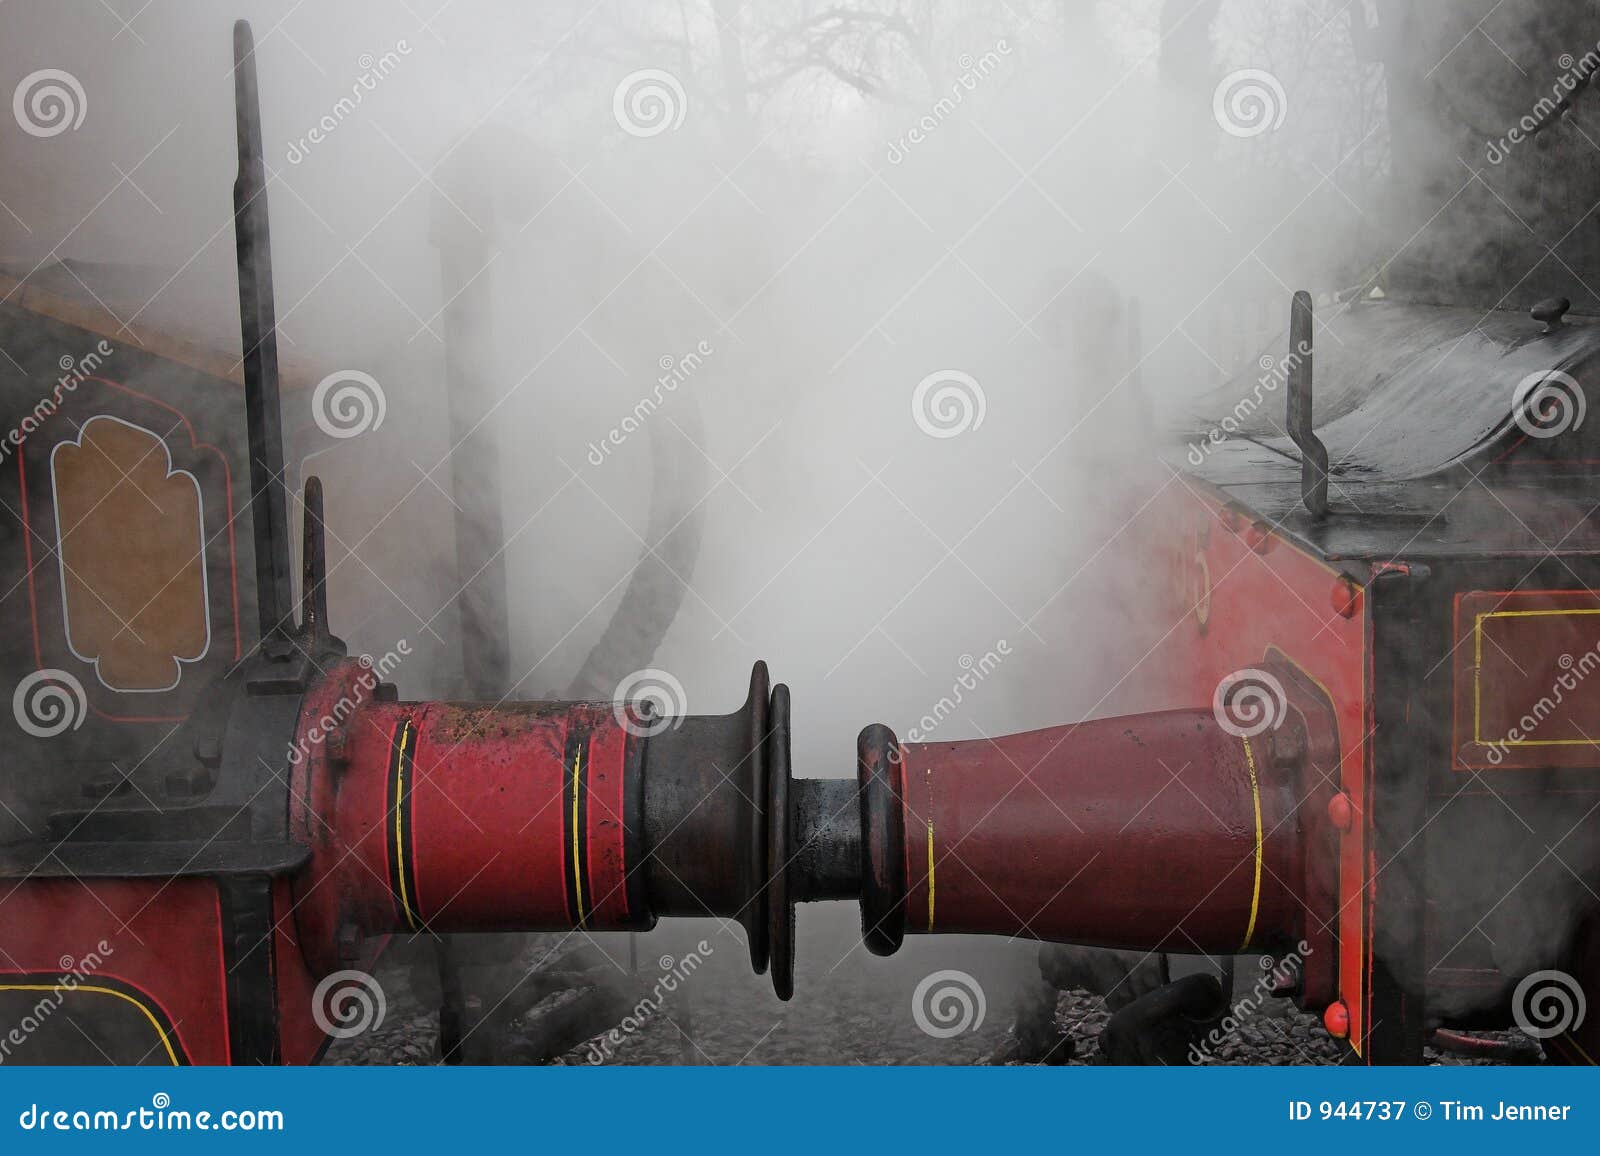 steam engine buffers